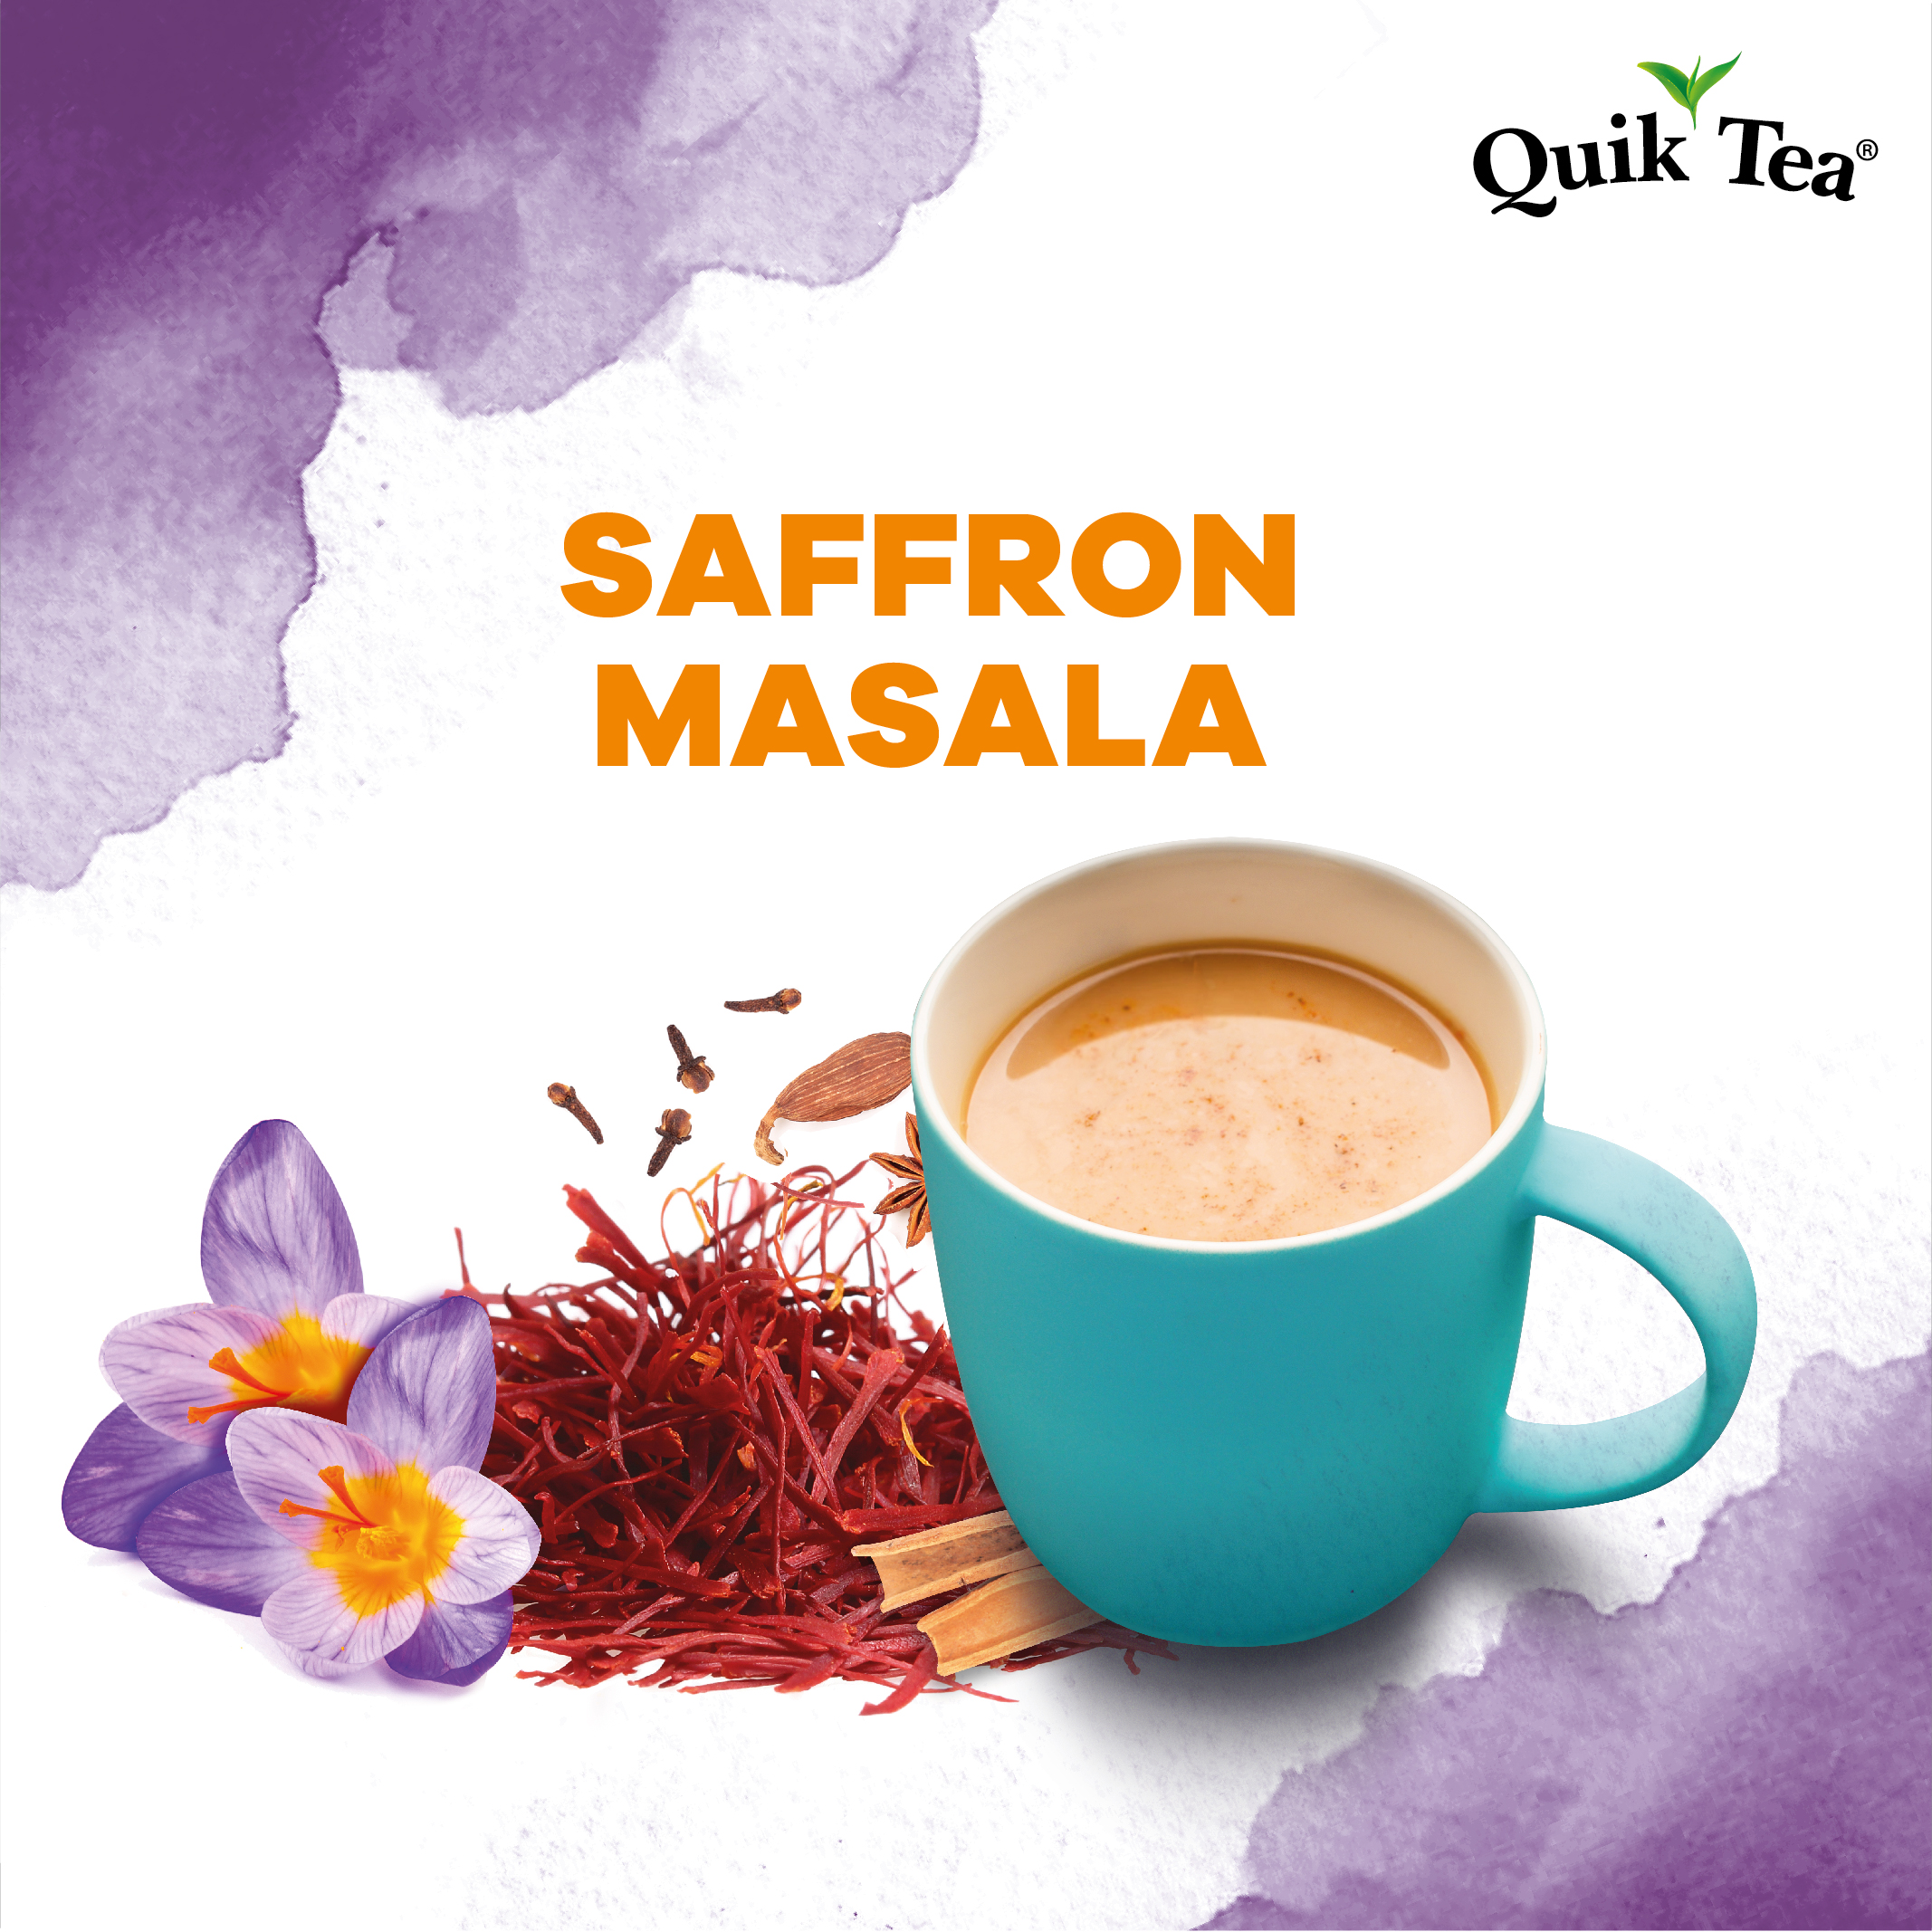 Saffron Masala Flavored Products